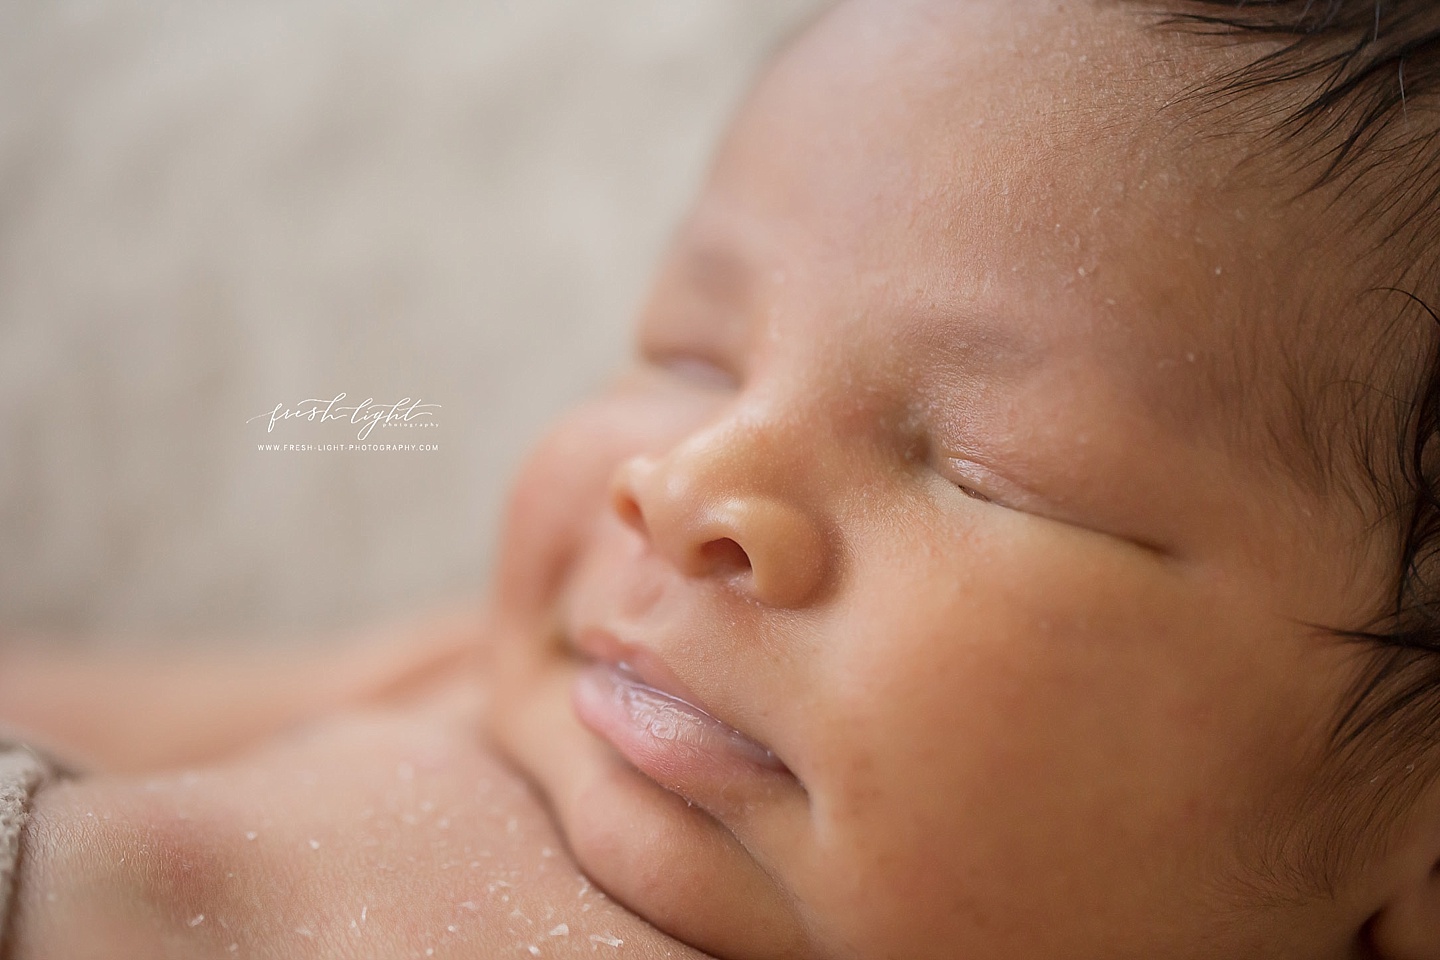 houston-newborn-photographer-fresh-light-photography